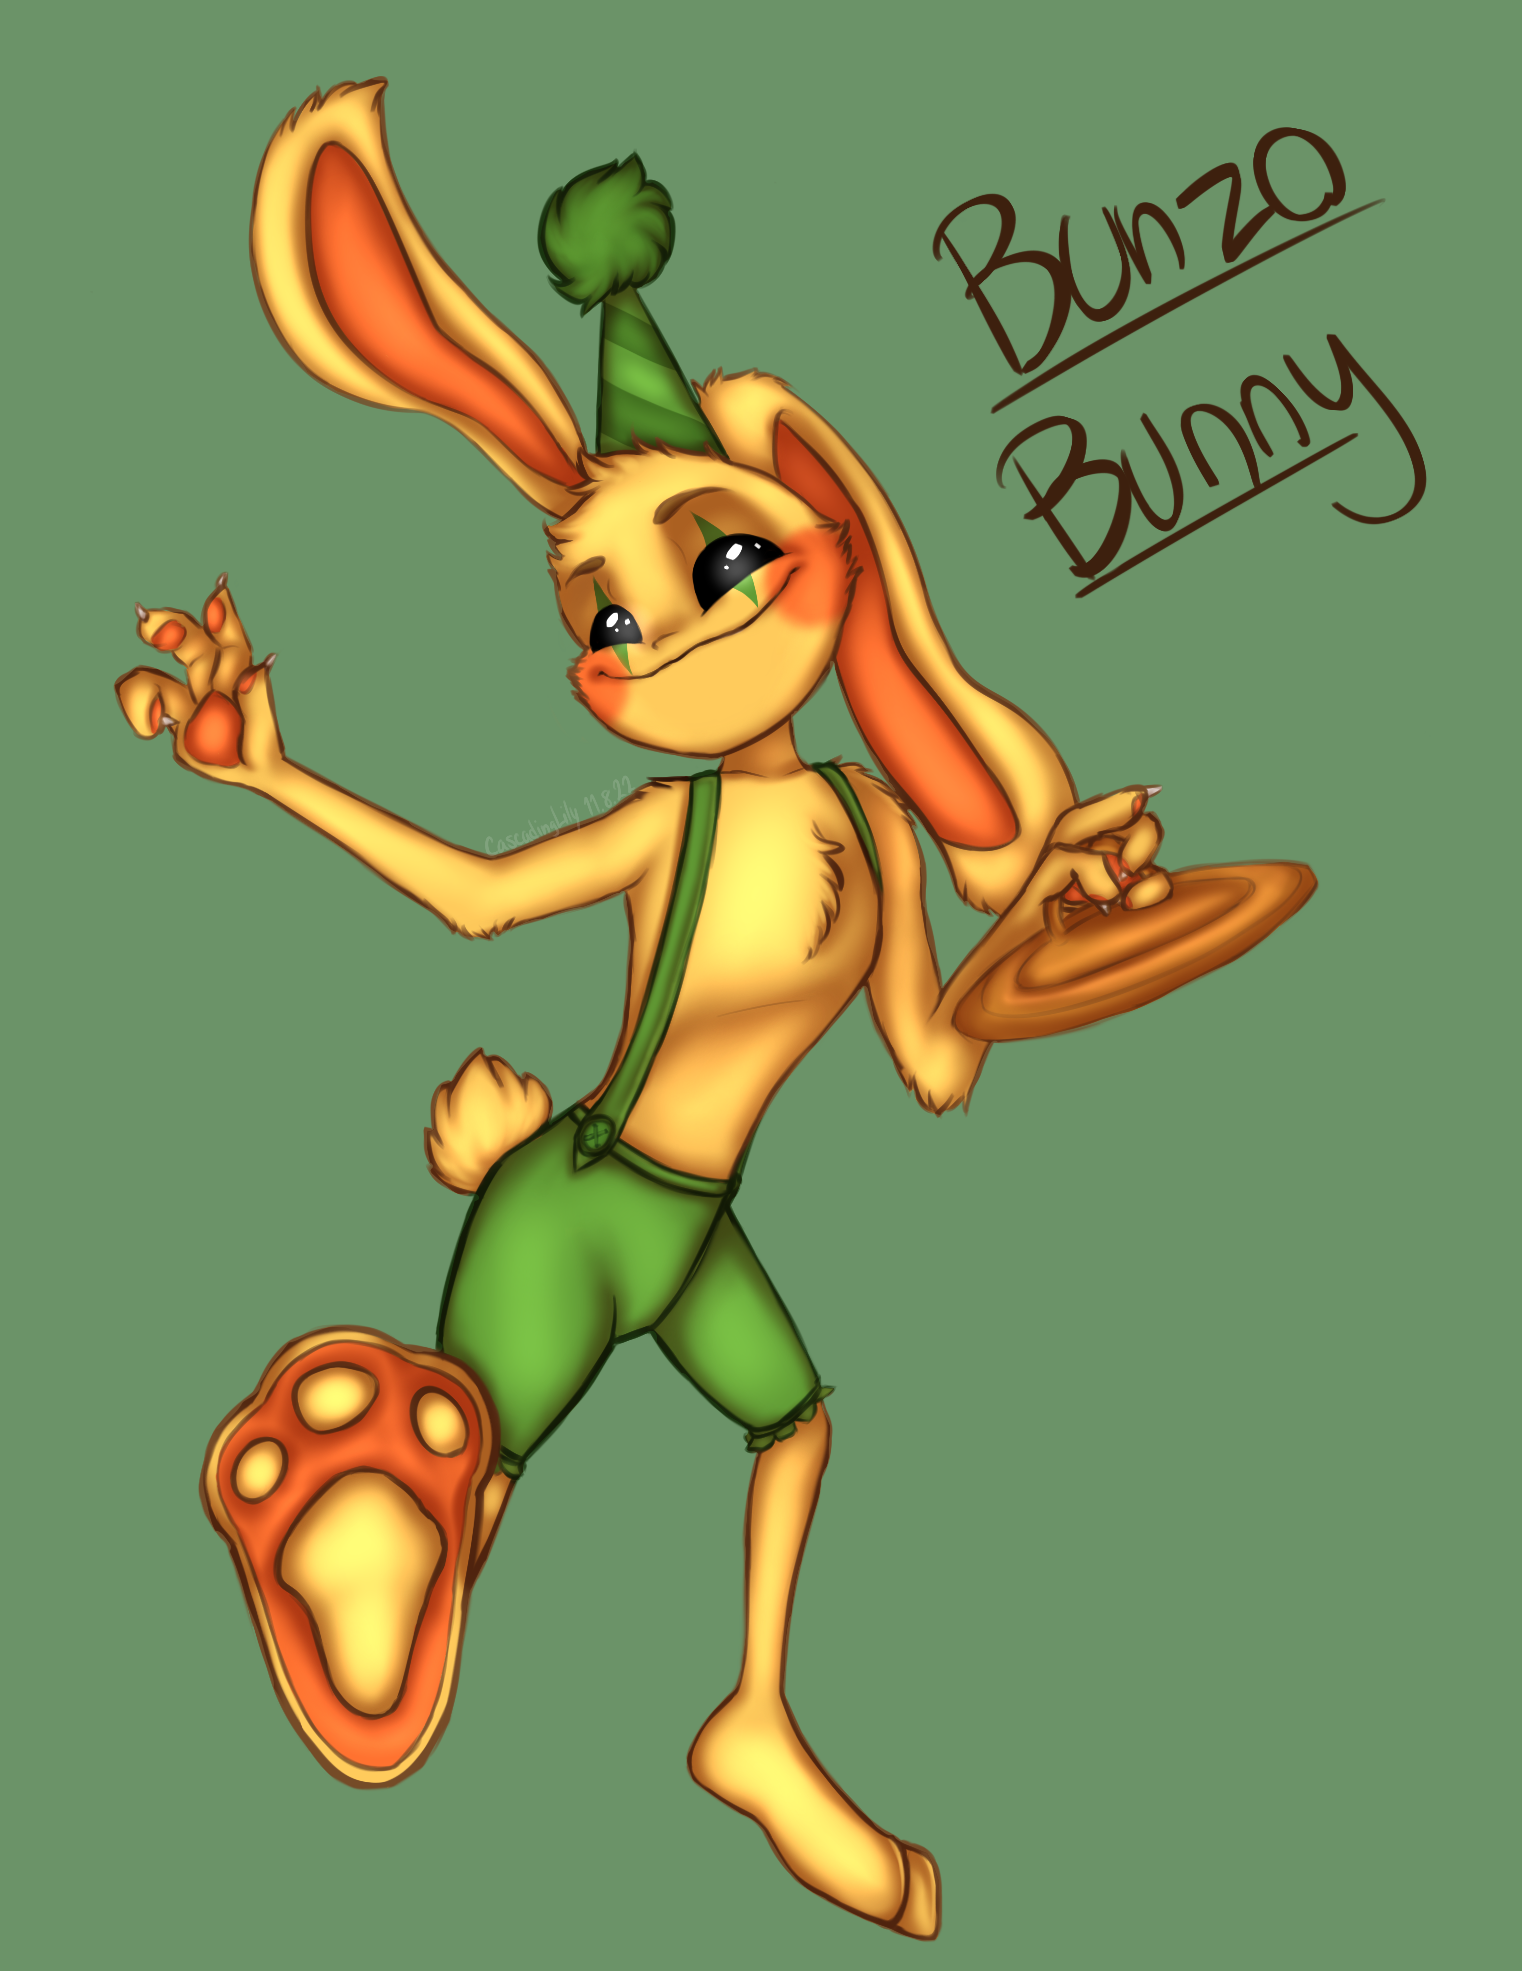  Bunzo Bunny